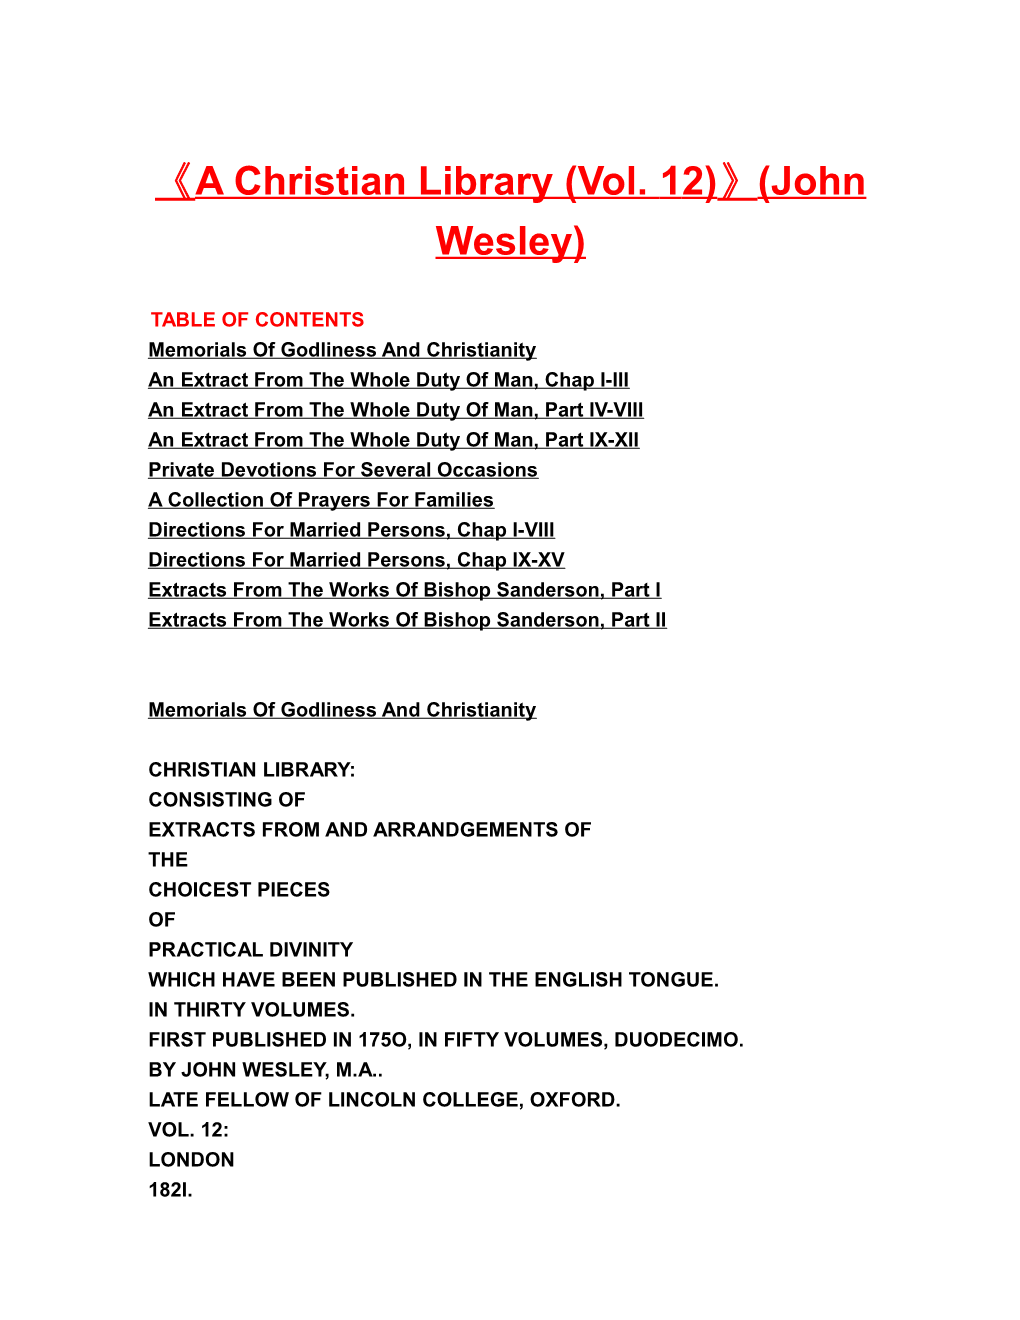 A Christian Library (Vol. 12) (John Wesley)